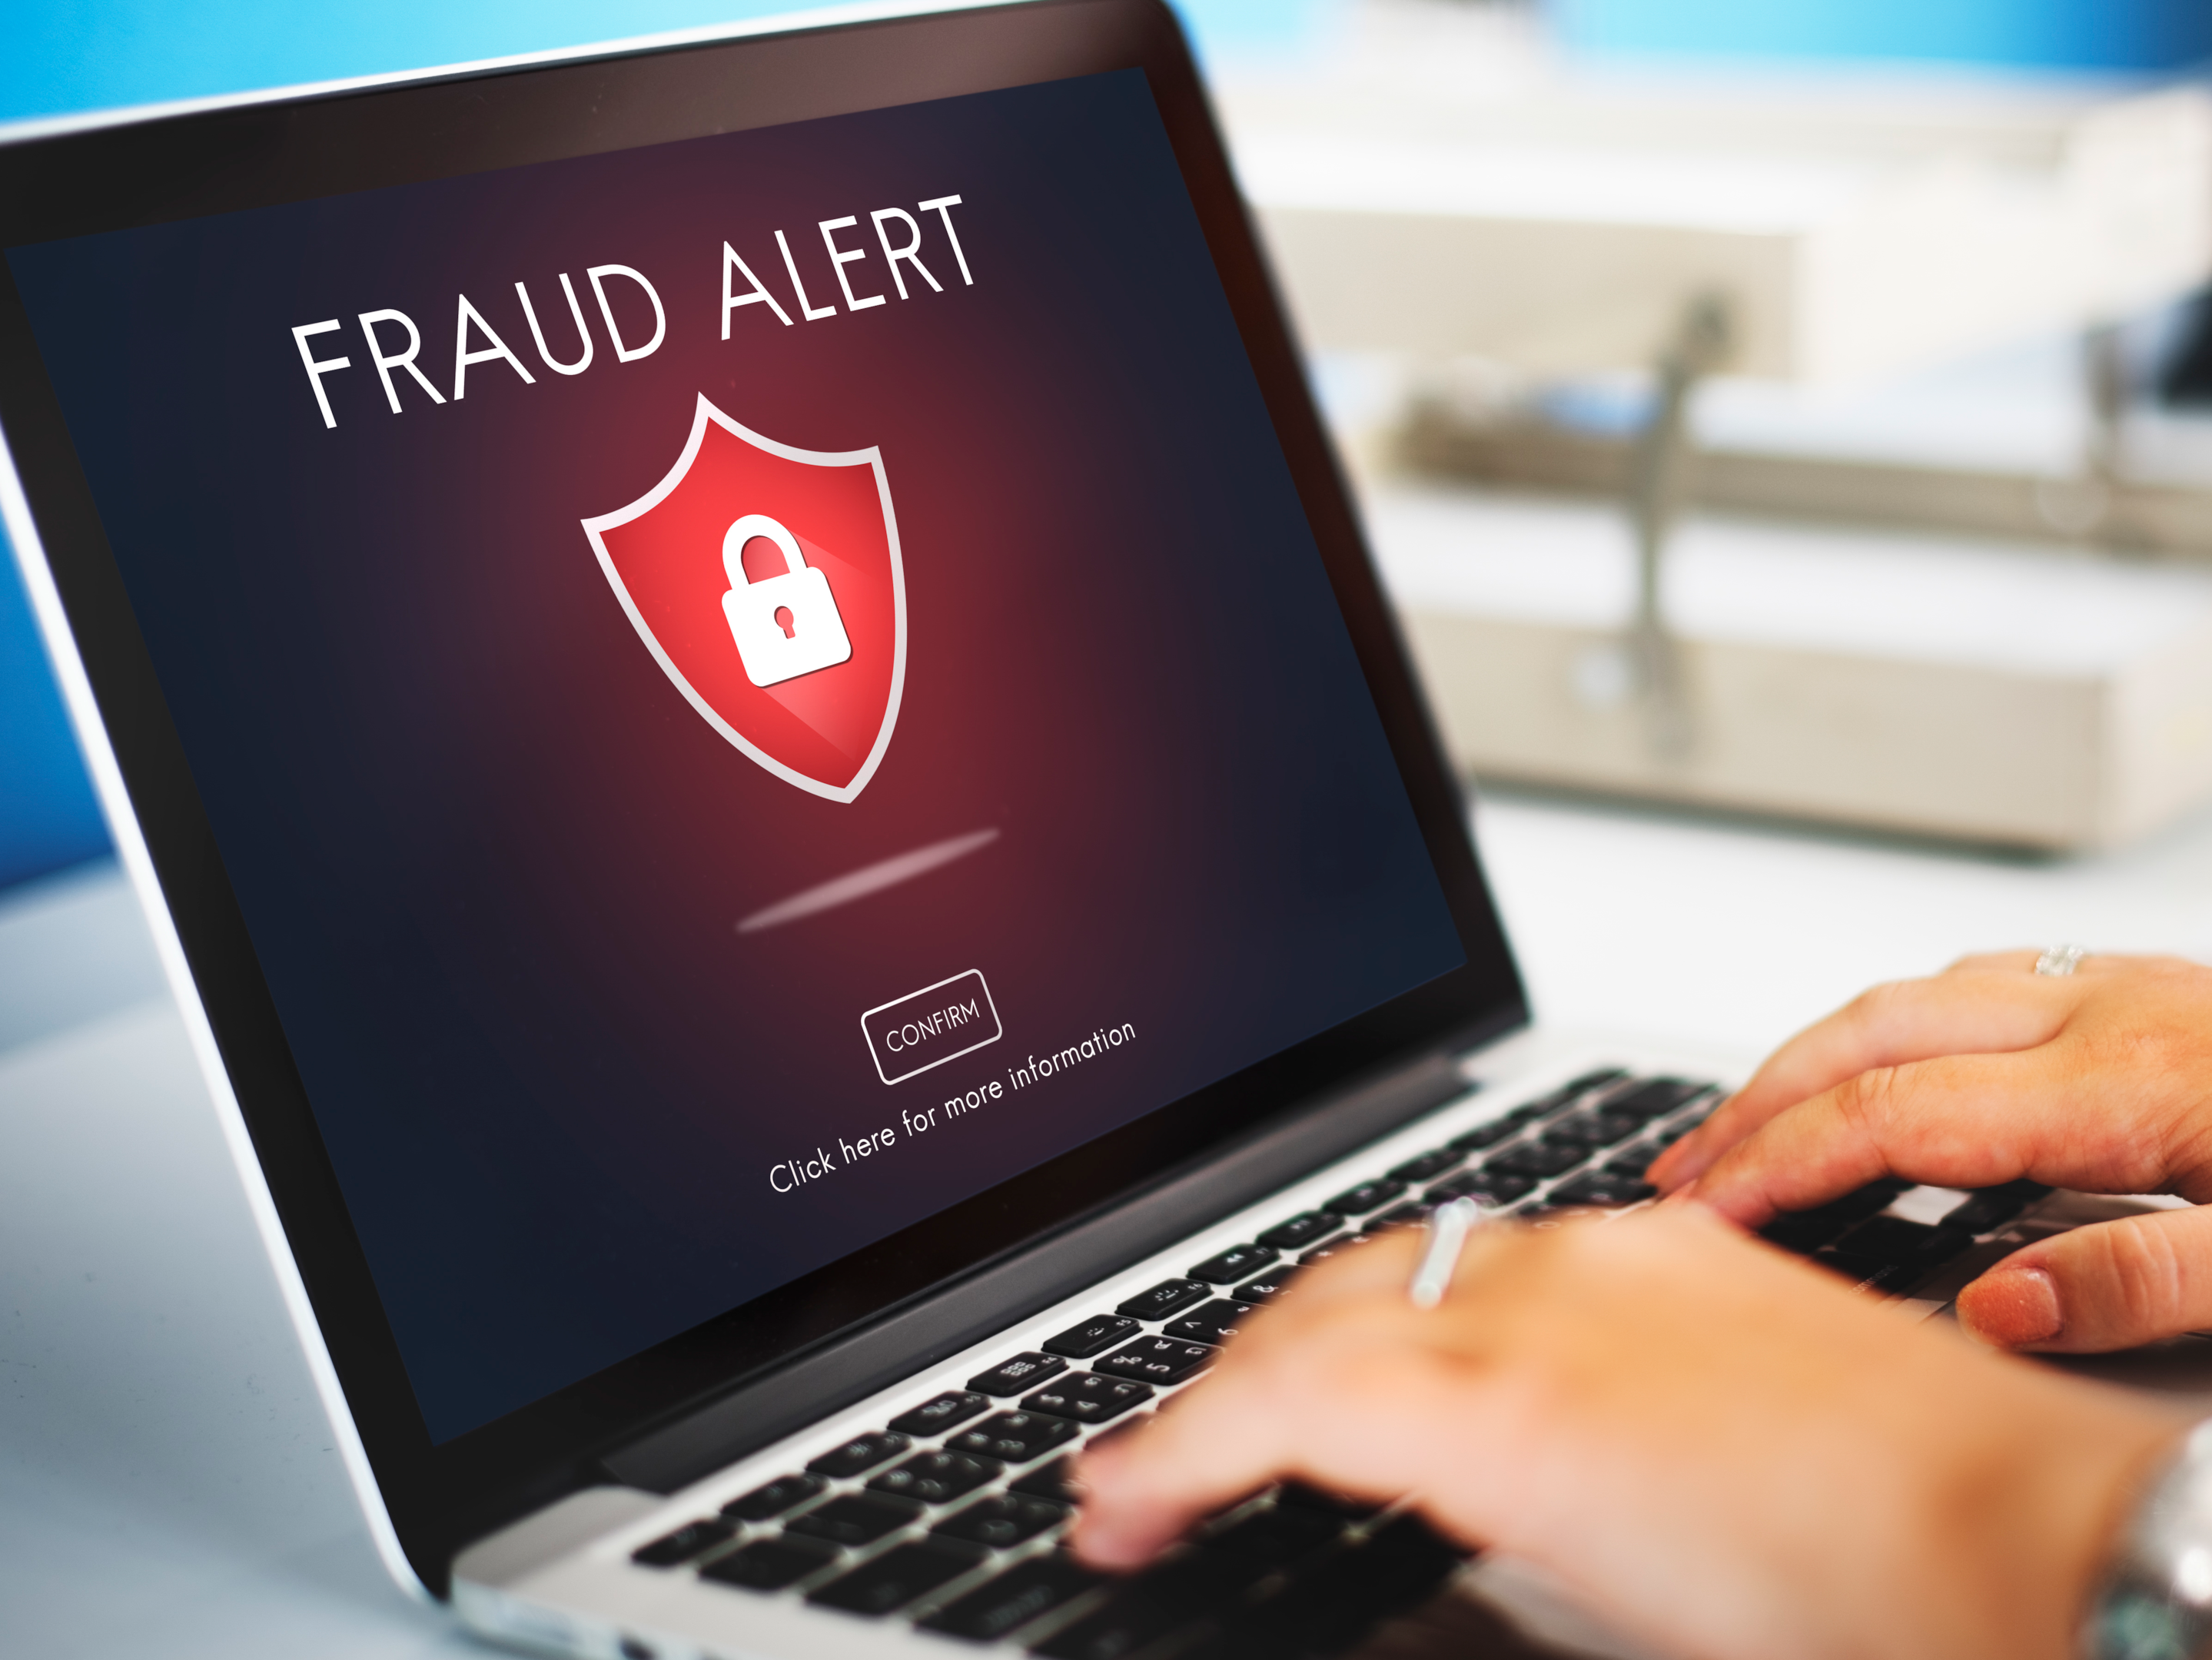 "fraud alert" highlighted on a laptop screen